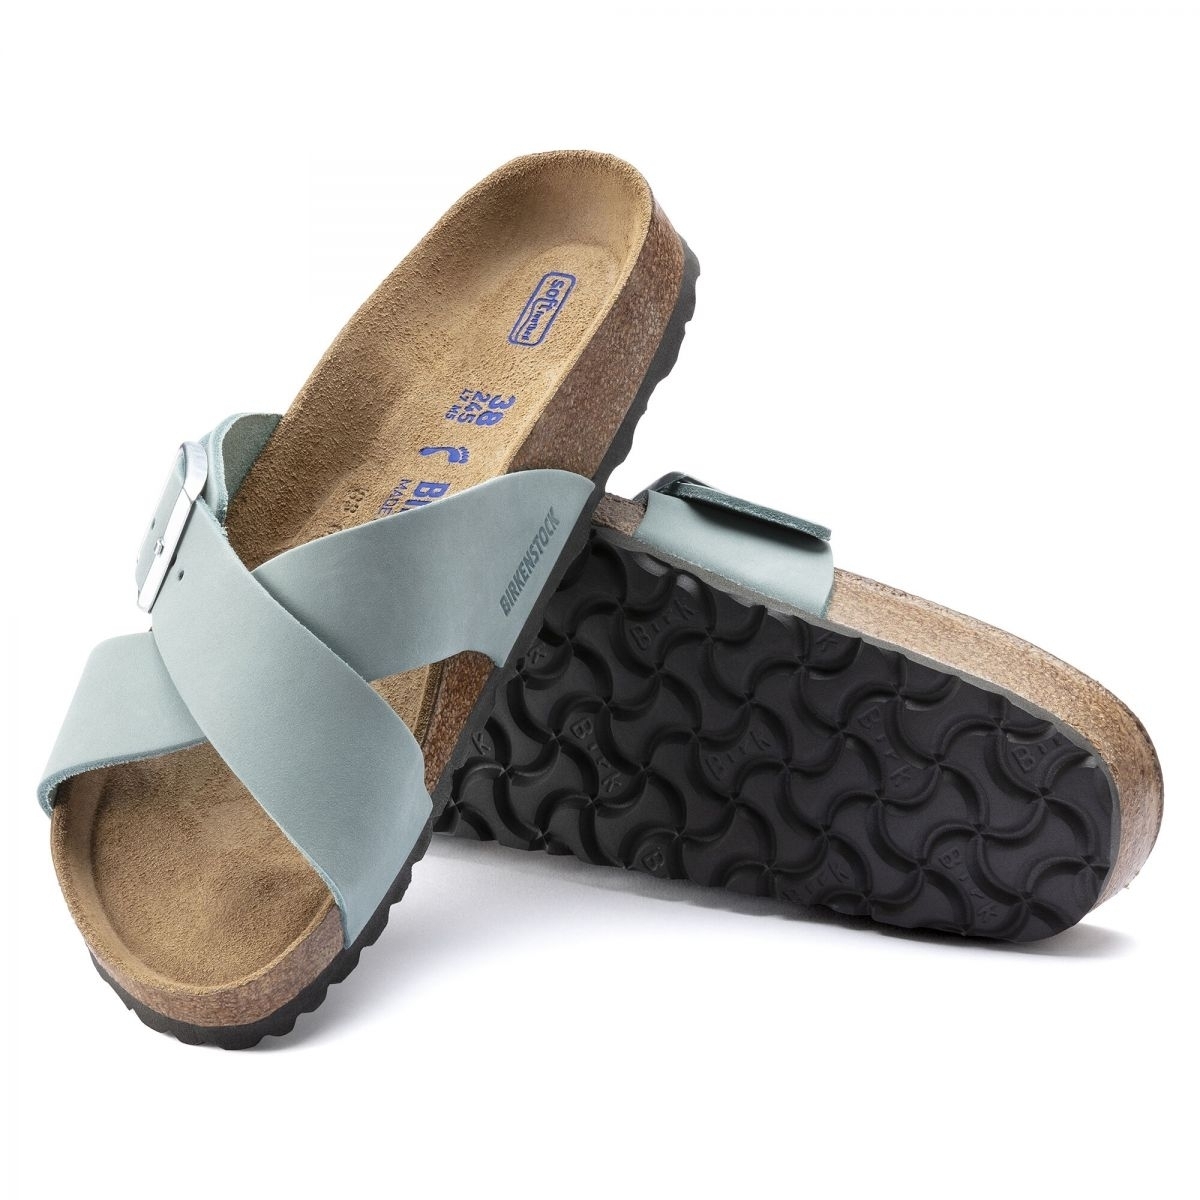 BIRKENSTOCK Women's Siena Narrow Soft Footbed Faded Aqua Nubuck Leather Sandal - 1021553 - AQUA, 5-5.5